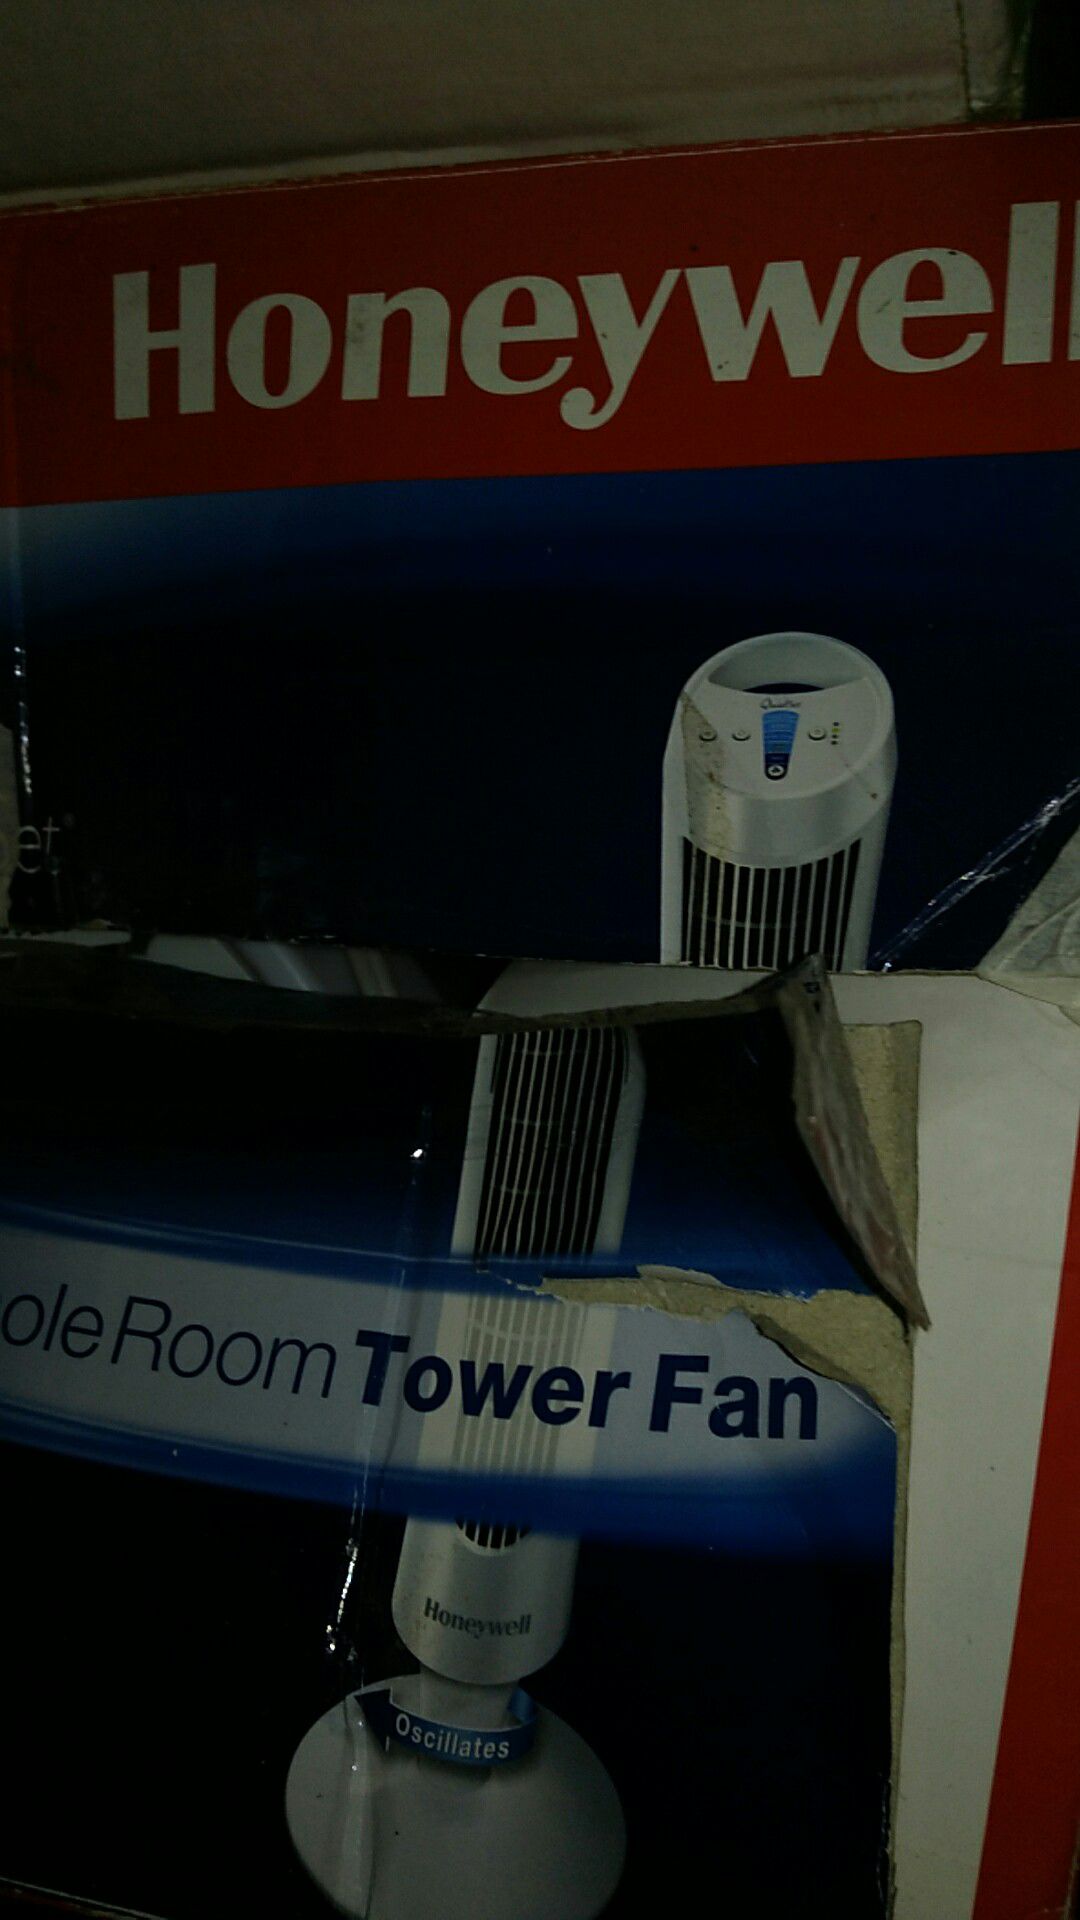 Honeywell Whole Room Tower fan.